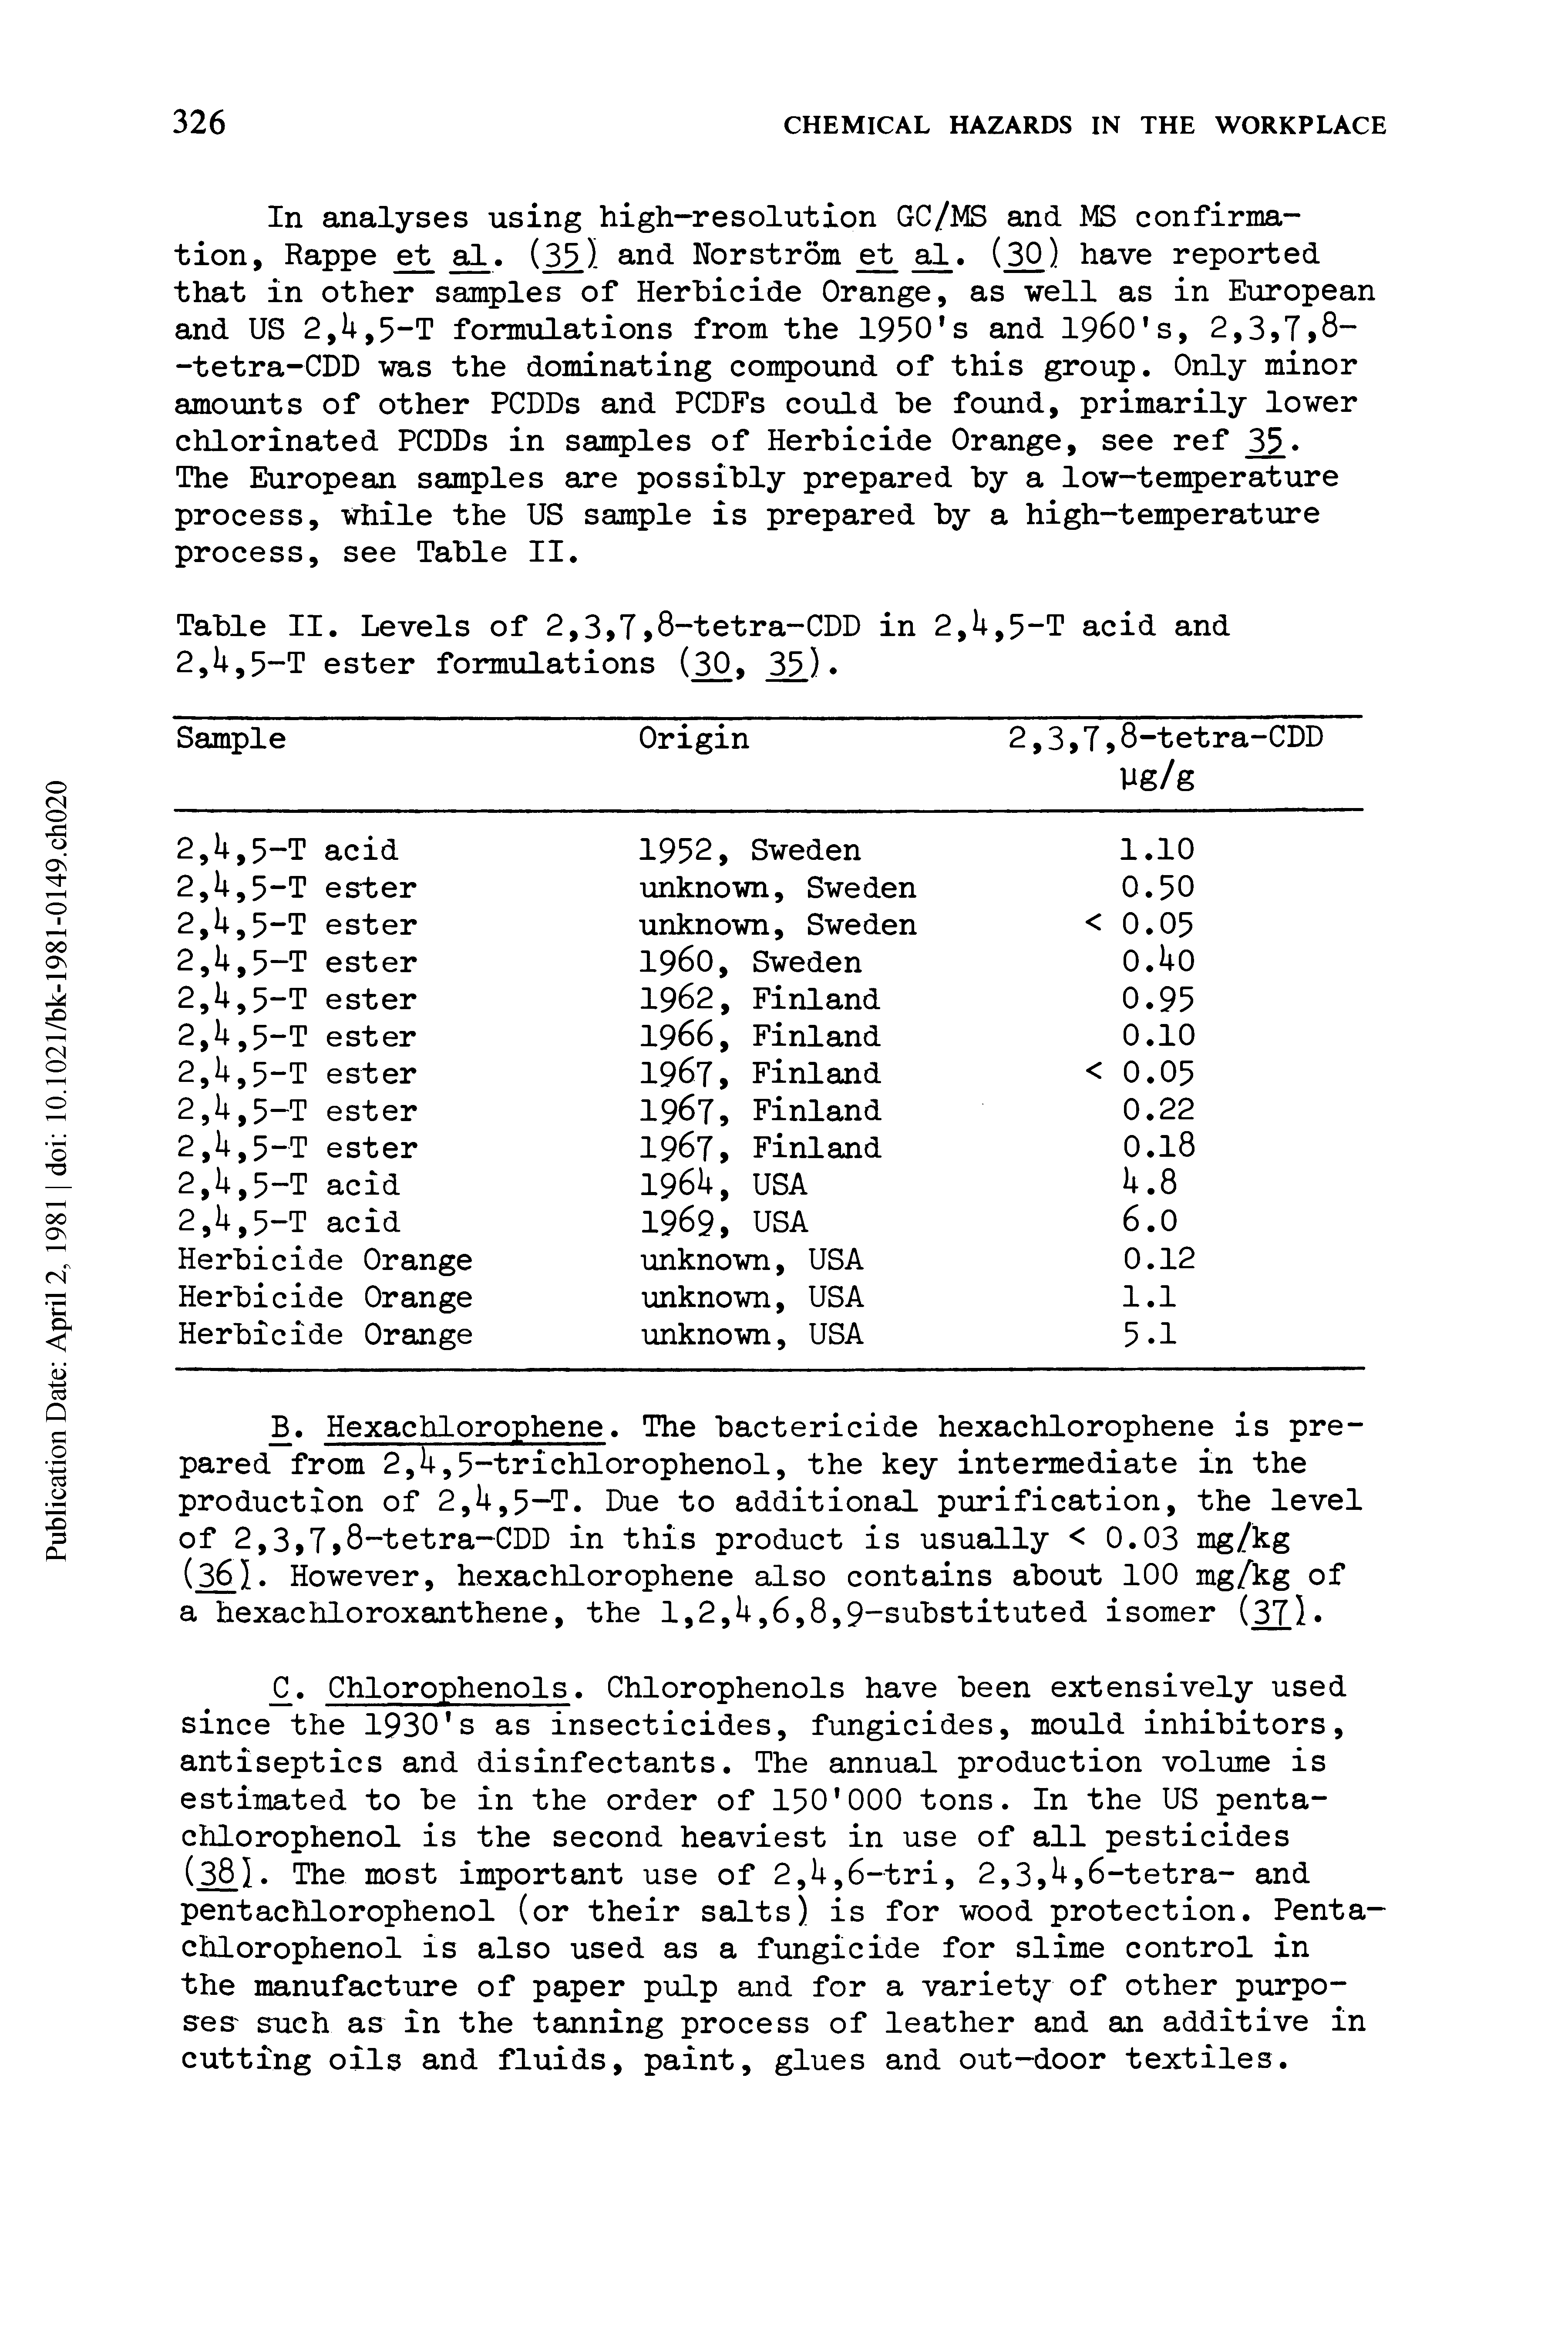 Table II. Levels of 2,3,7,8-tetra-CDD in 2,U,5-T acid and 2,U,5-T ester formulations (30, 35).